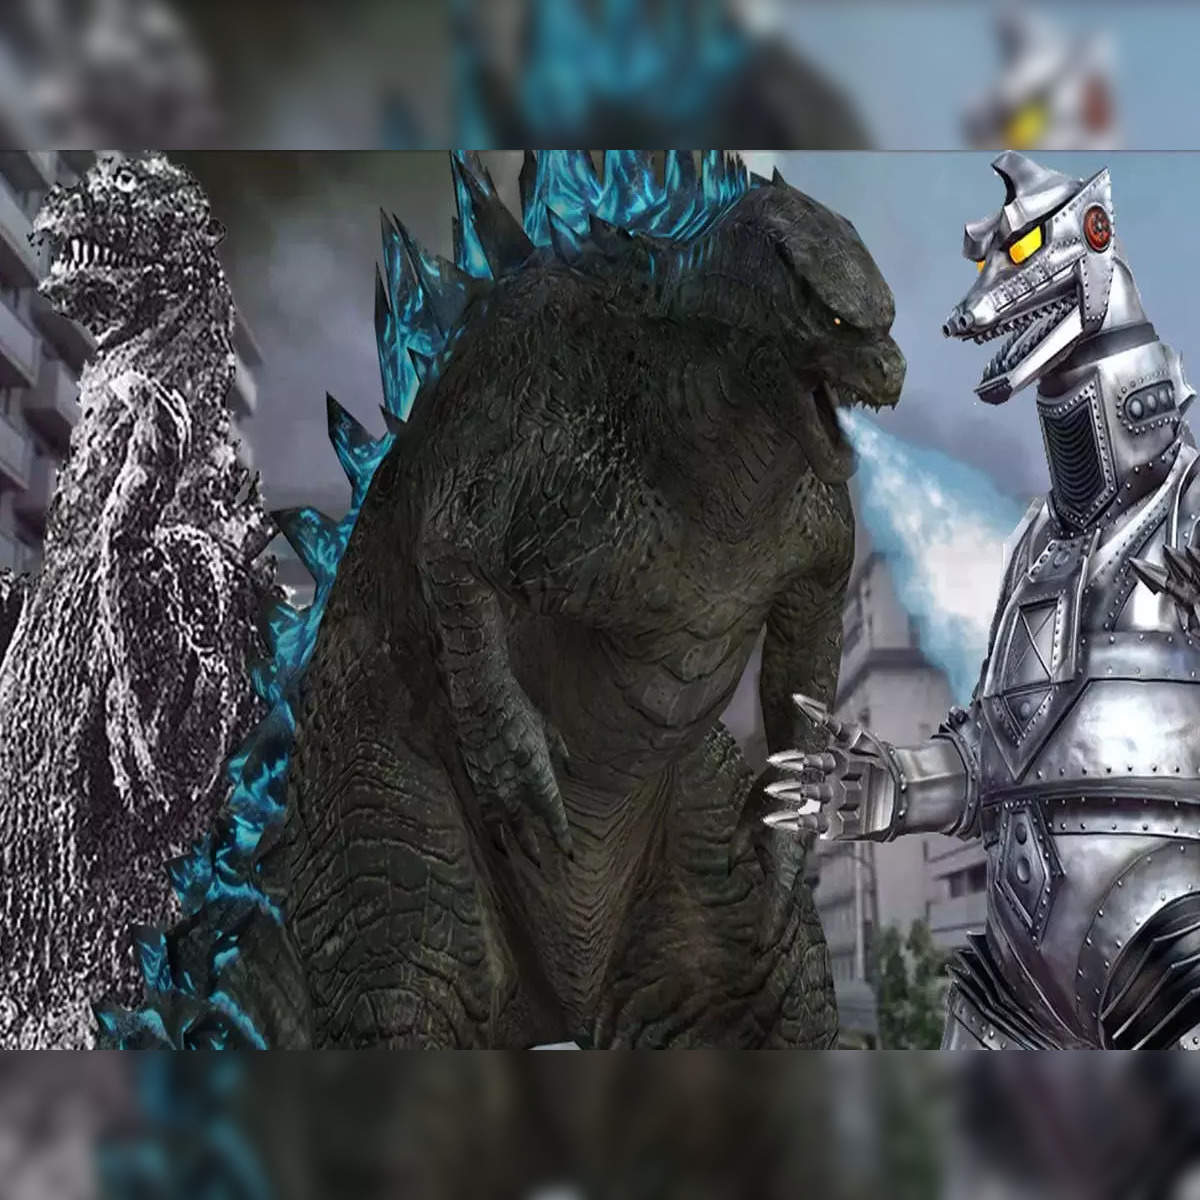 godzilla minus one: Godzilla Minus One online watch: When will it release  on Blu-ray? - The Economic Times